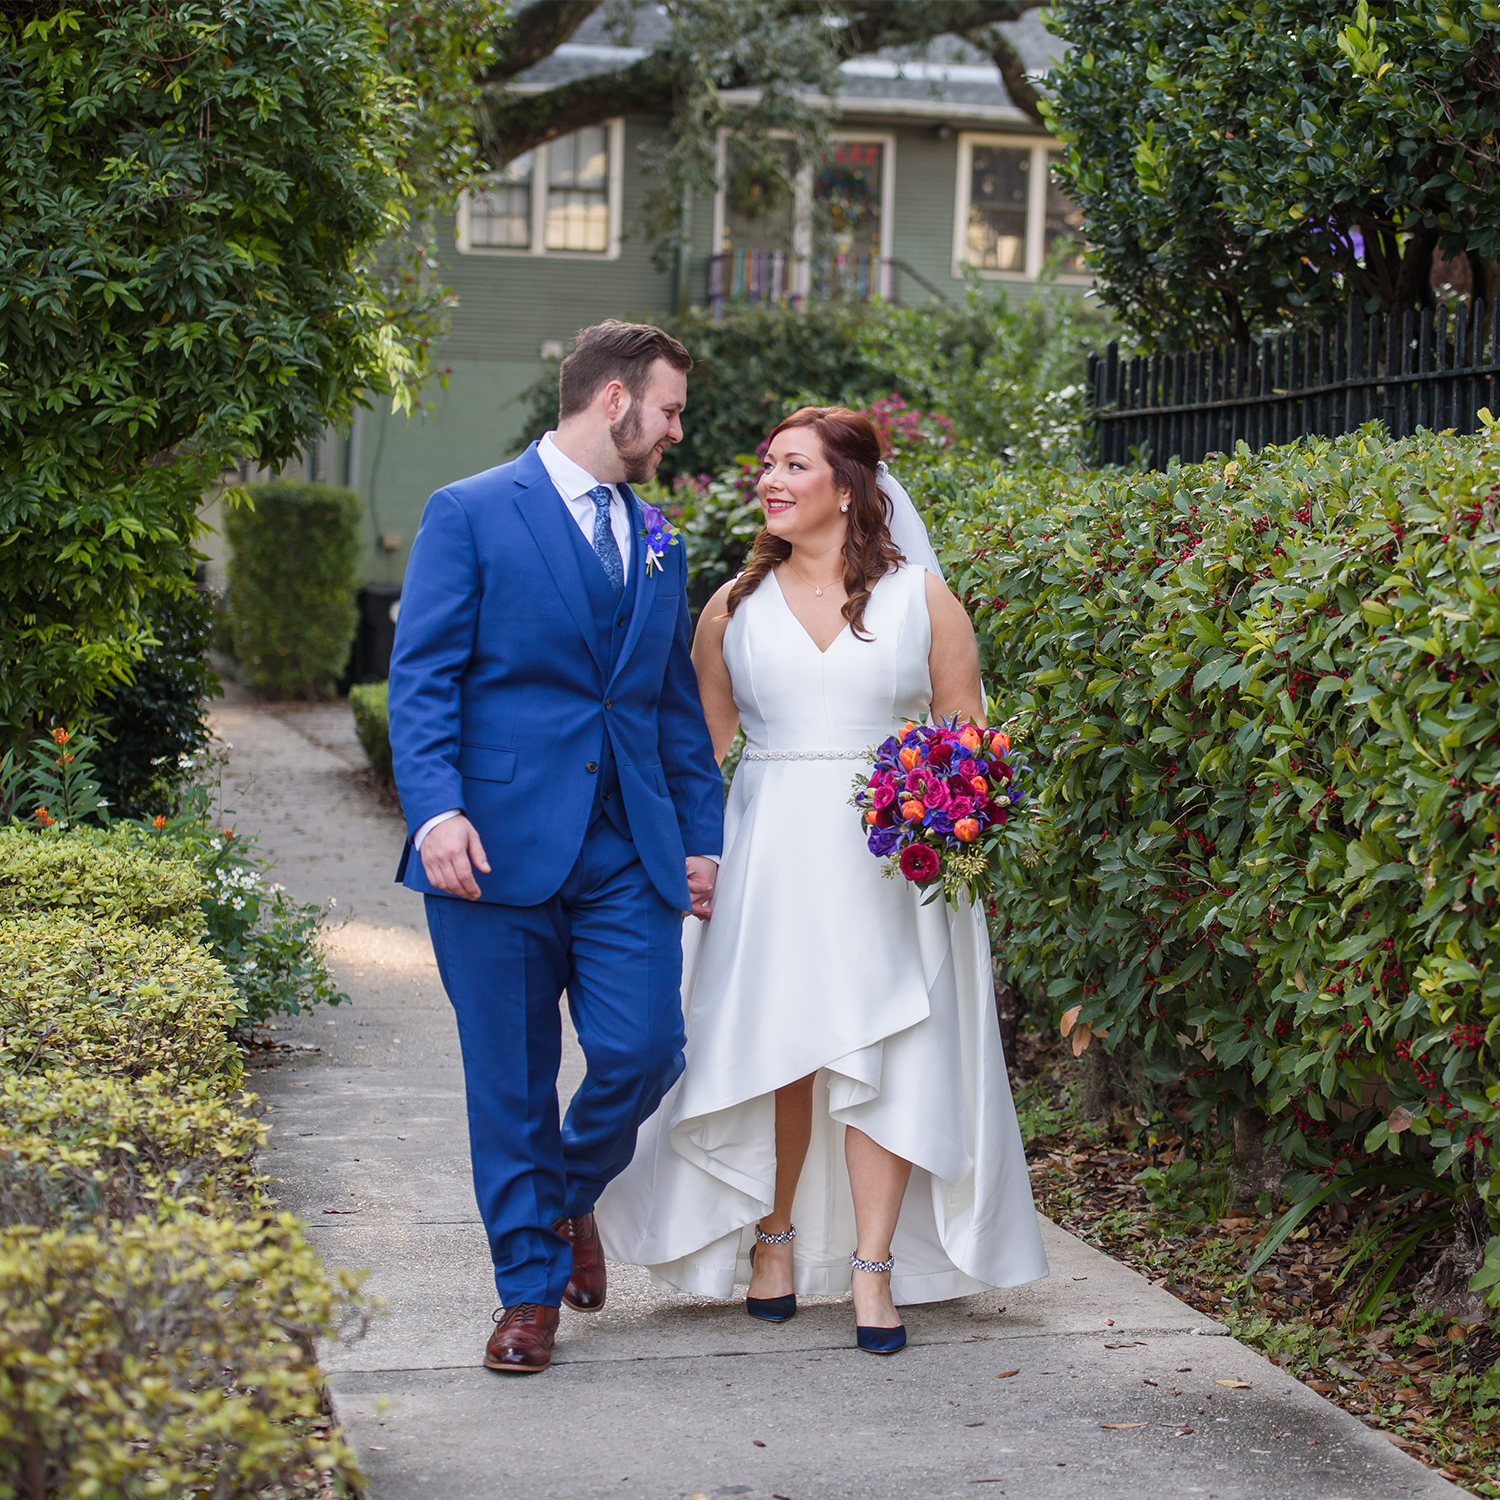 Intimate Uptown New Orleans Magazine St The Gallery Wedding | Tori & Luke